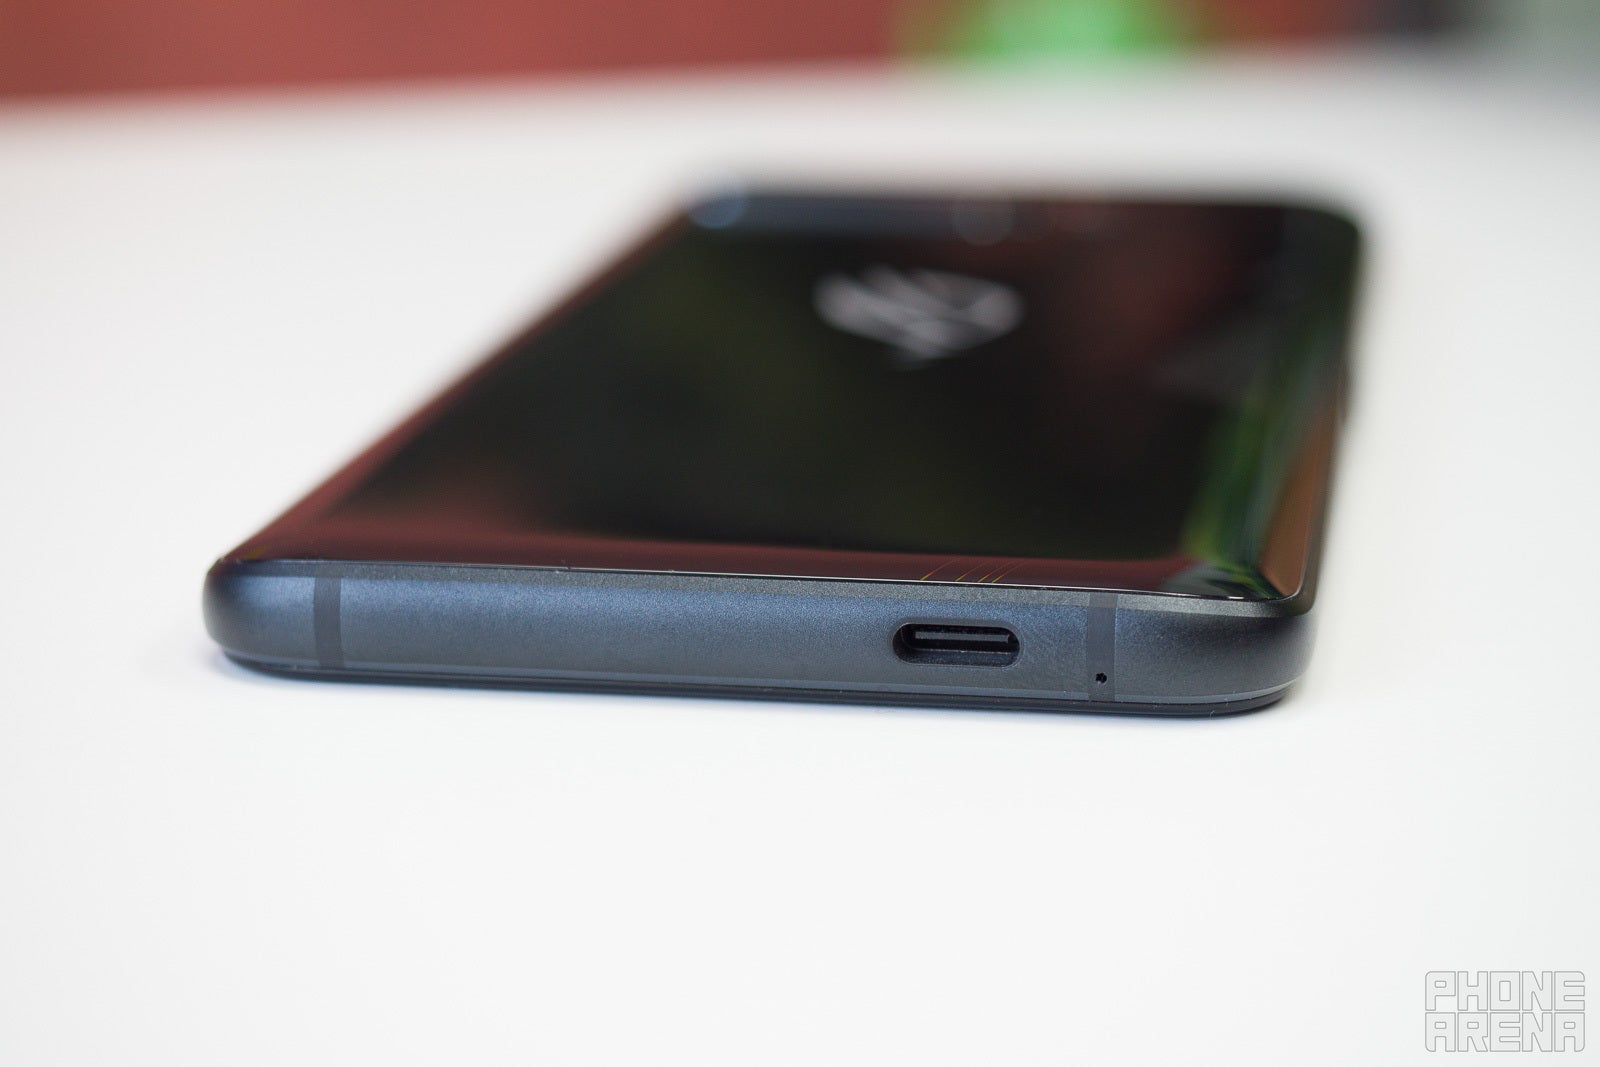 No 3.5 mm jack - Asus ROG Phone 3 Review: Gaming Beast